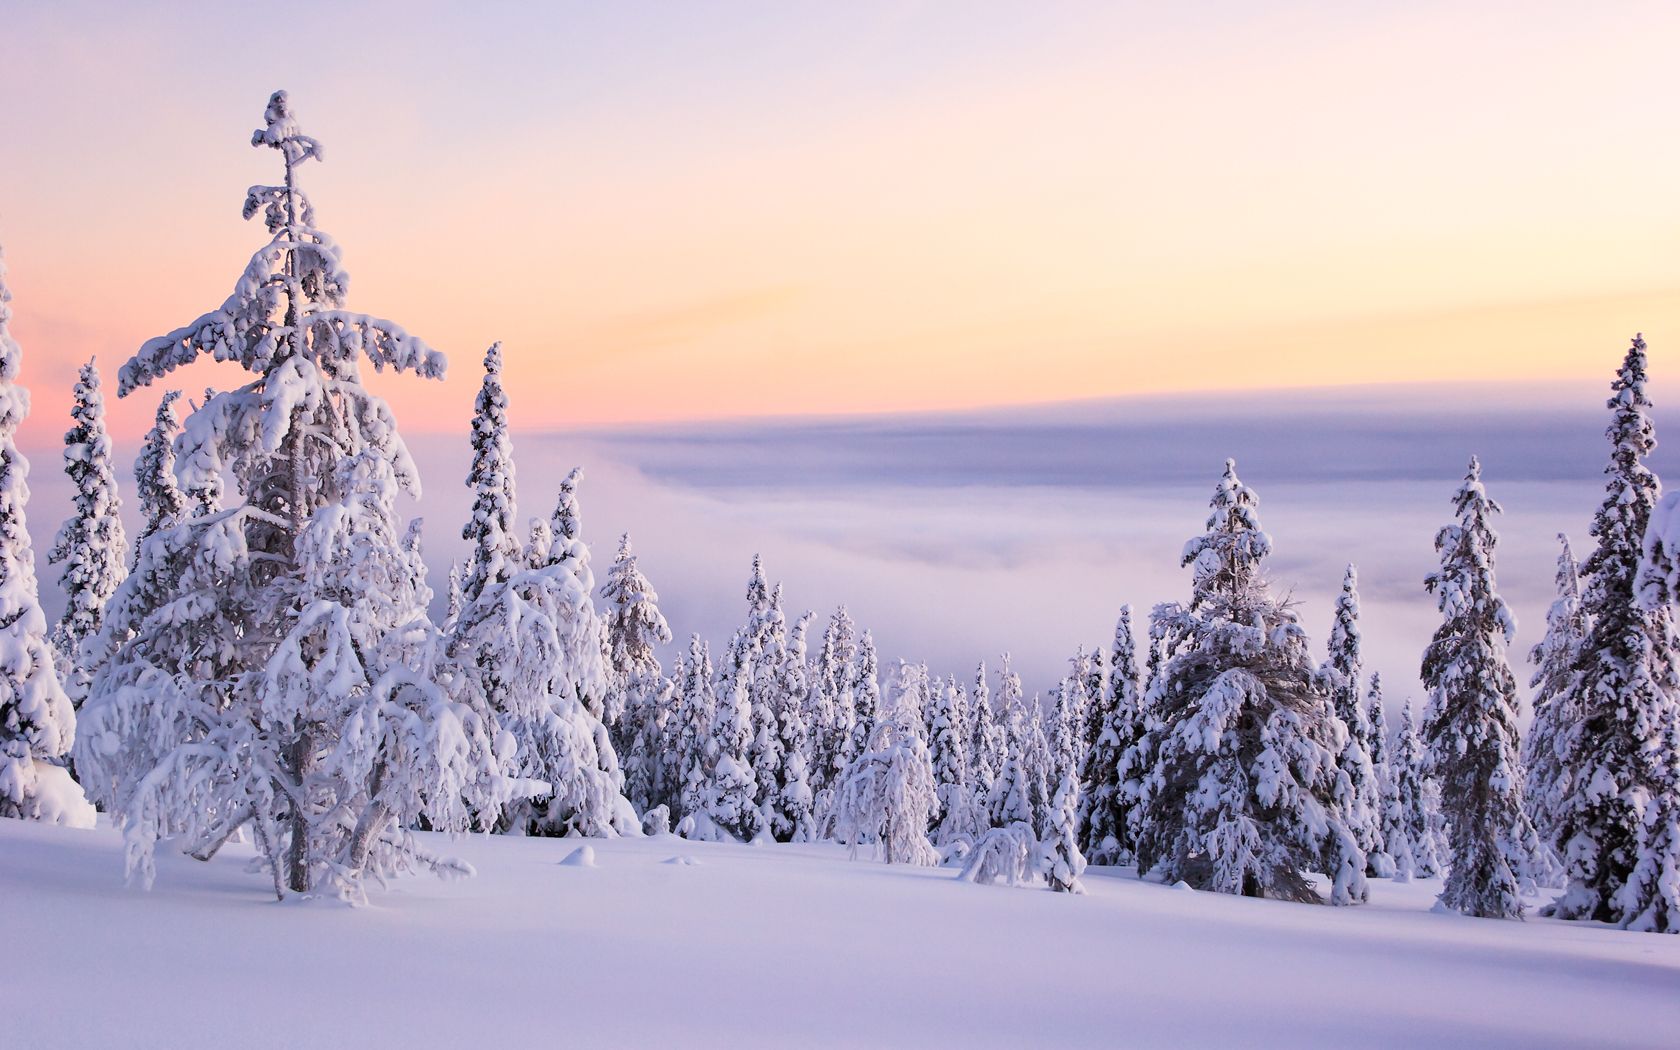 Finland. Winter wallpaper, Winter desktop background, Free winter wallpaper